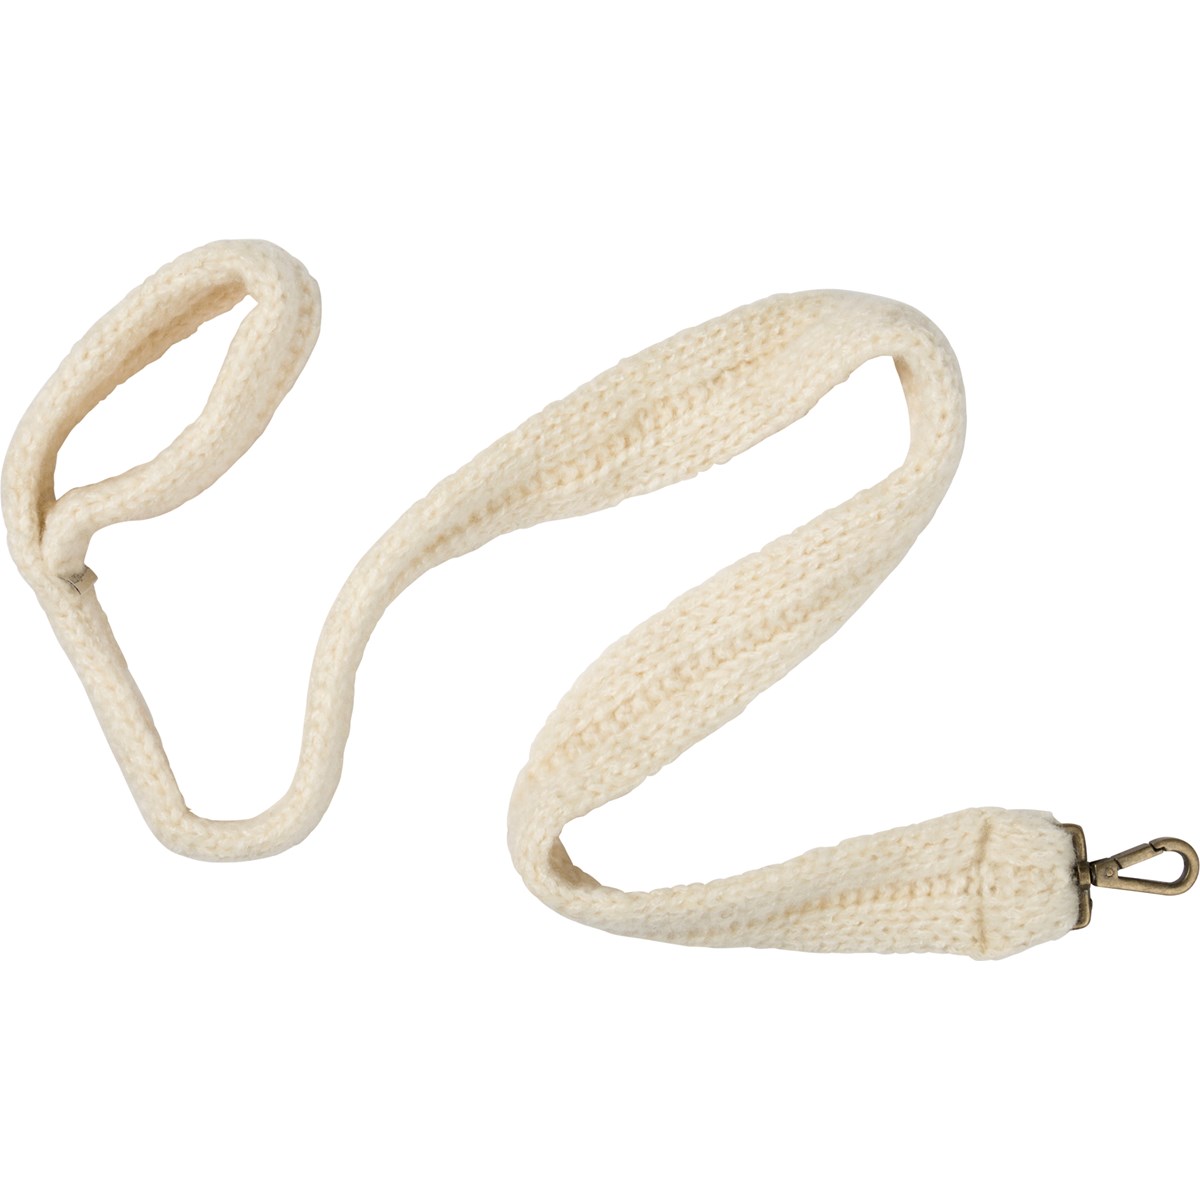 Cream Knitted Dog Leash - Wool, Metal